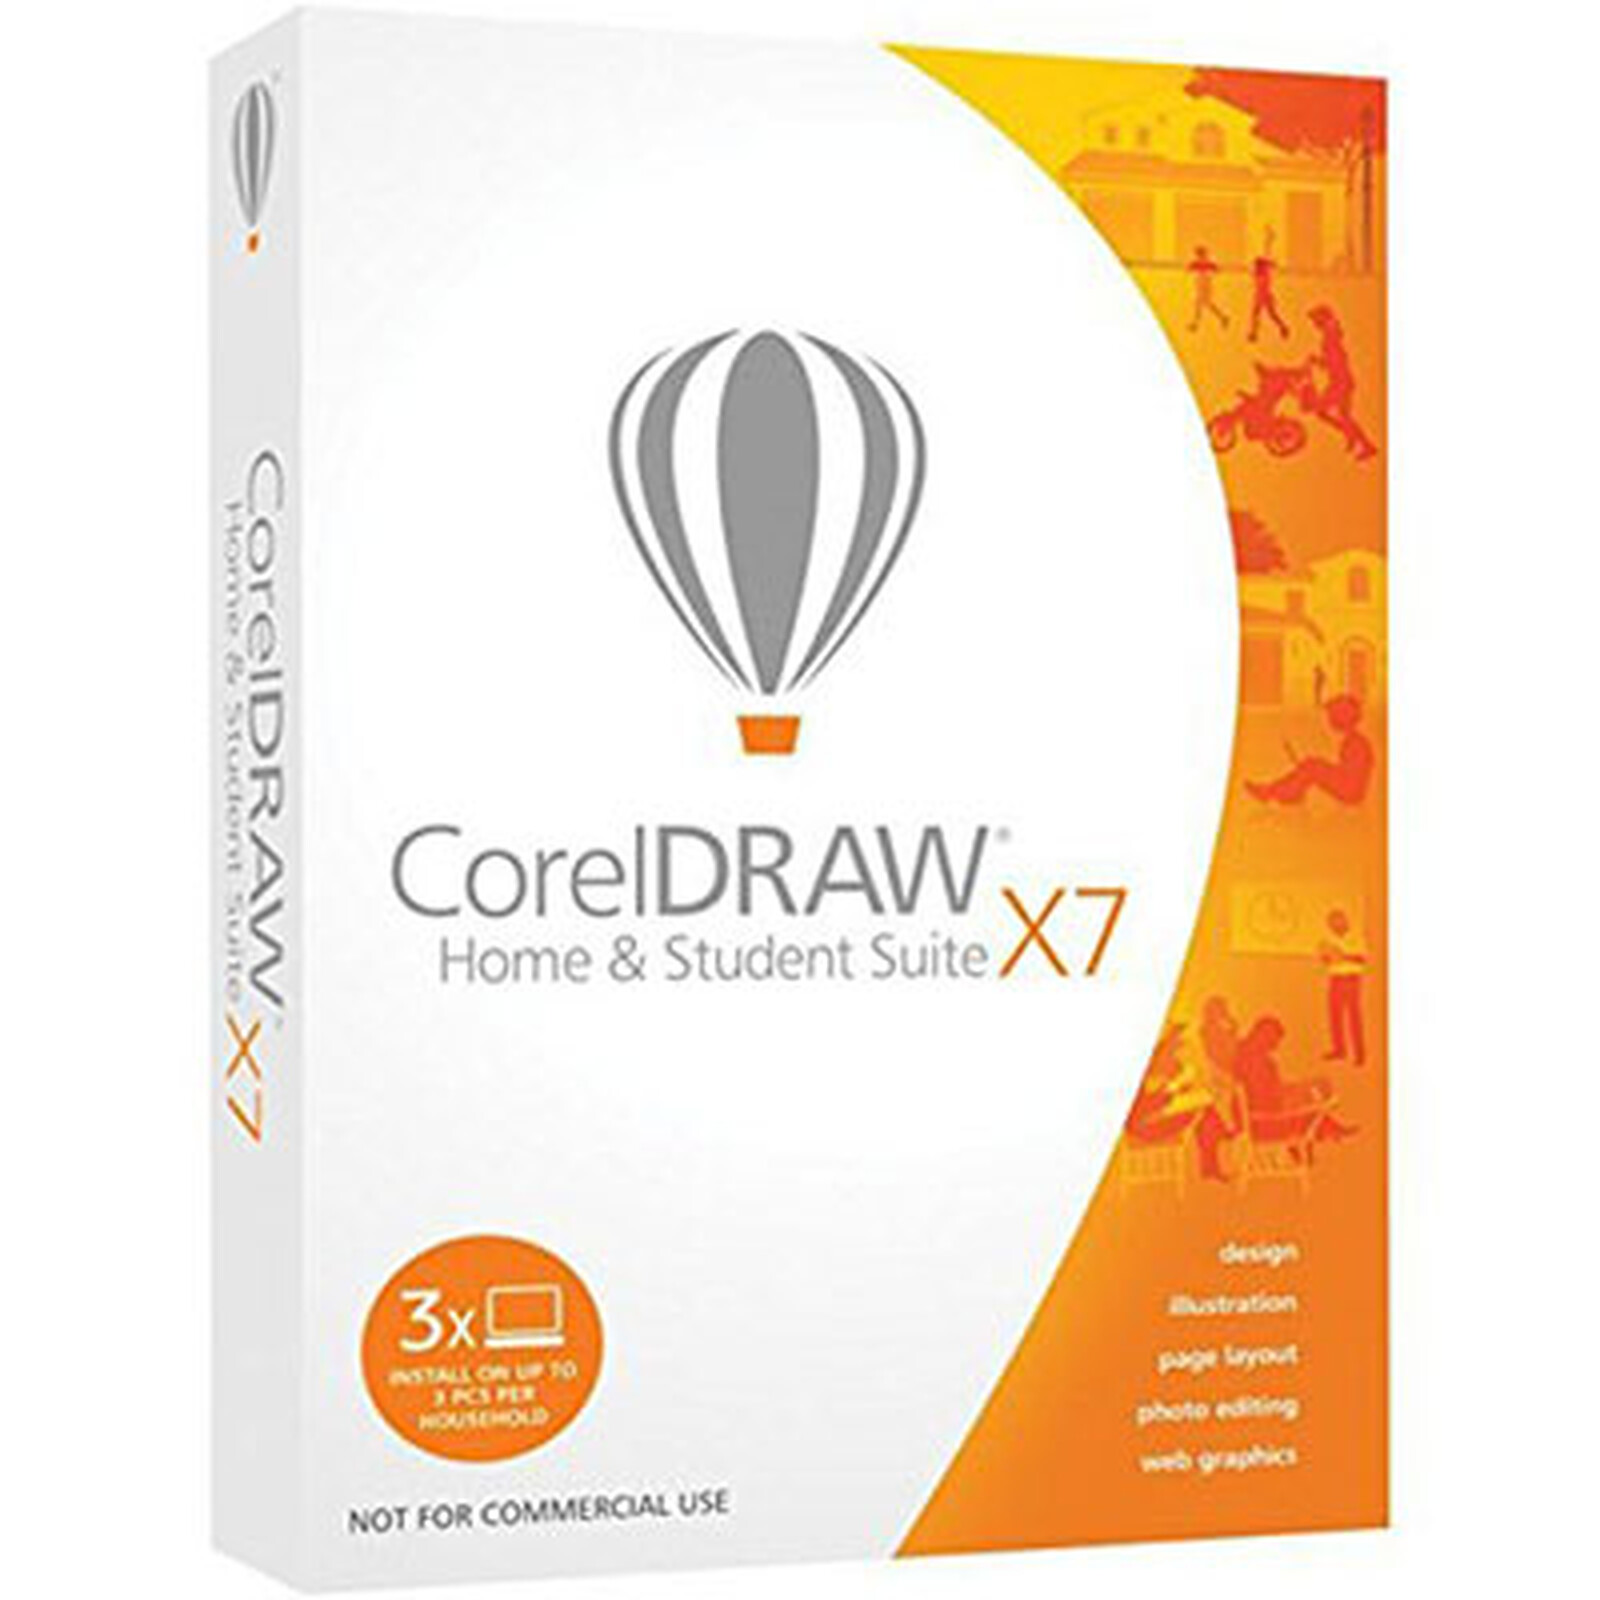 coreldraw student version free